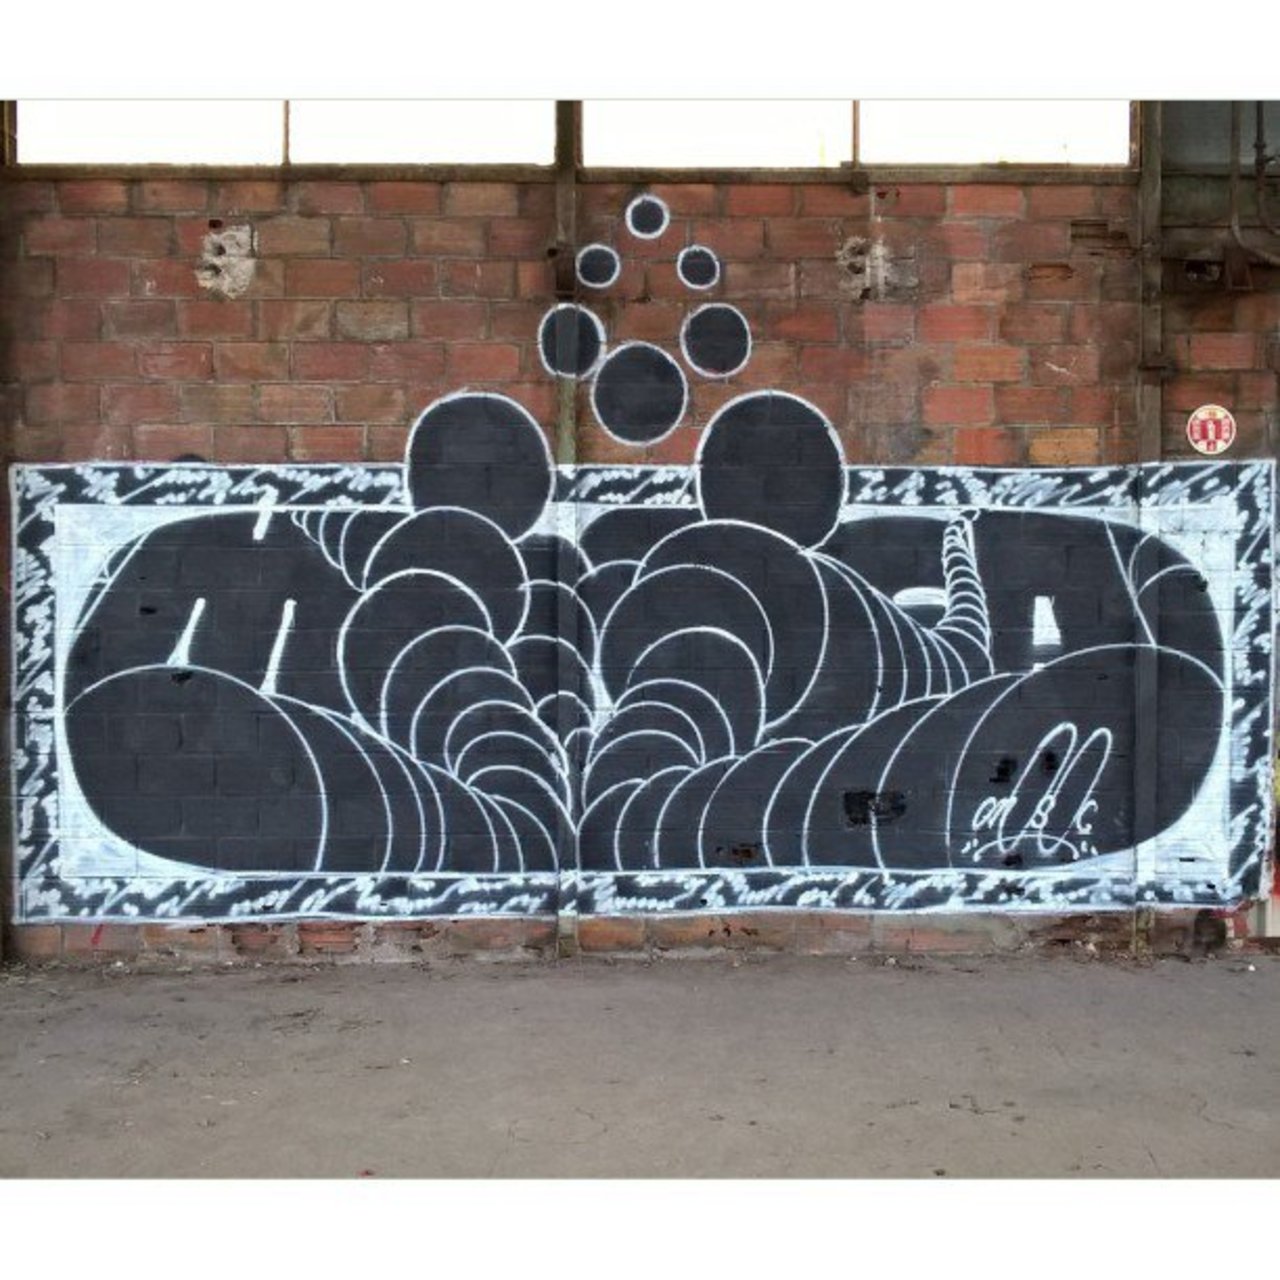 MOSA
#PALcrew #PeaceAndLoveCrew #streetart #graffiti #graff #art #fatcap #bombing #sprayart #spraycanart #wallart #… https://t.co/fgdcmLVhto